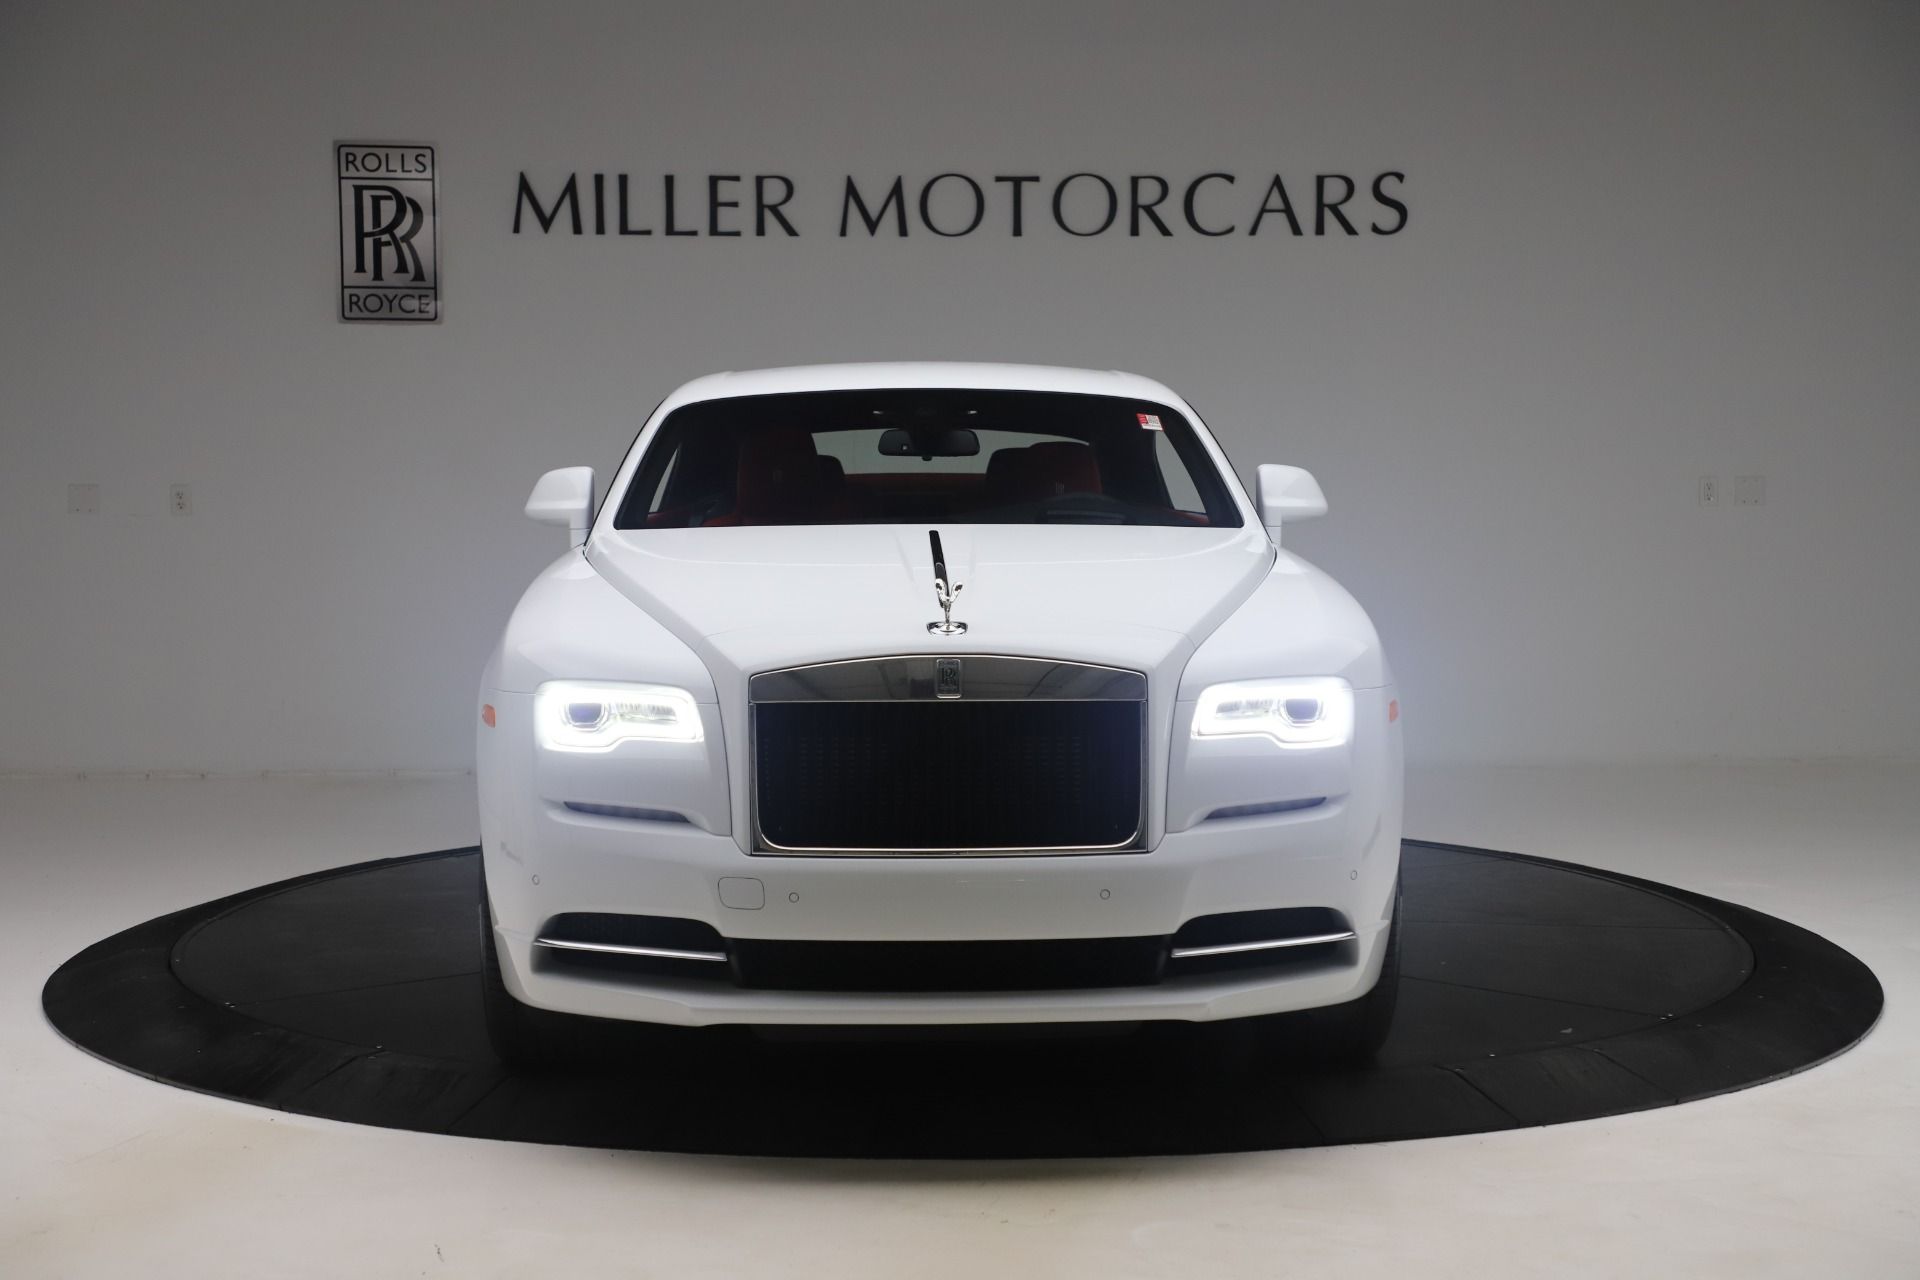 New 2020 Rolls Royce Wraith ($325). McLaren